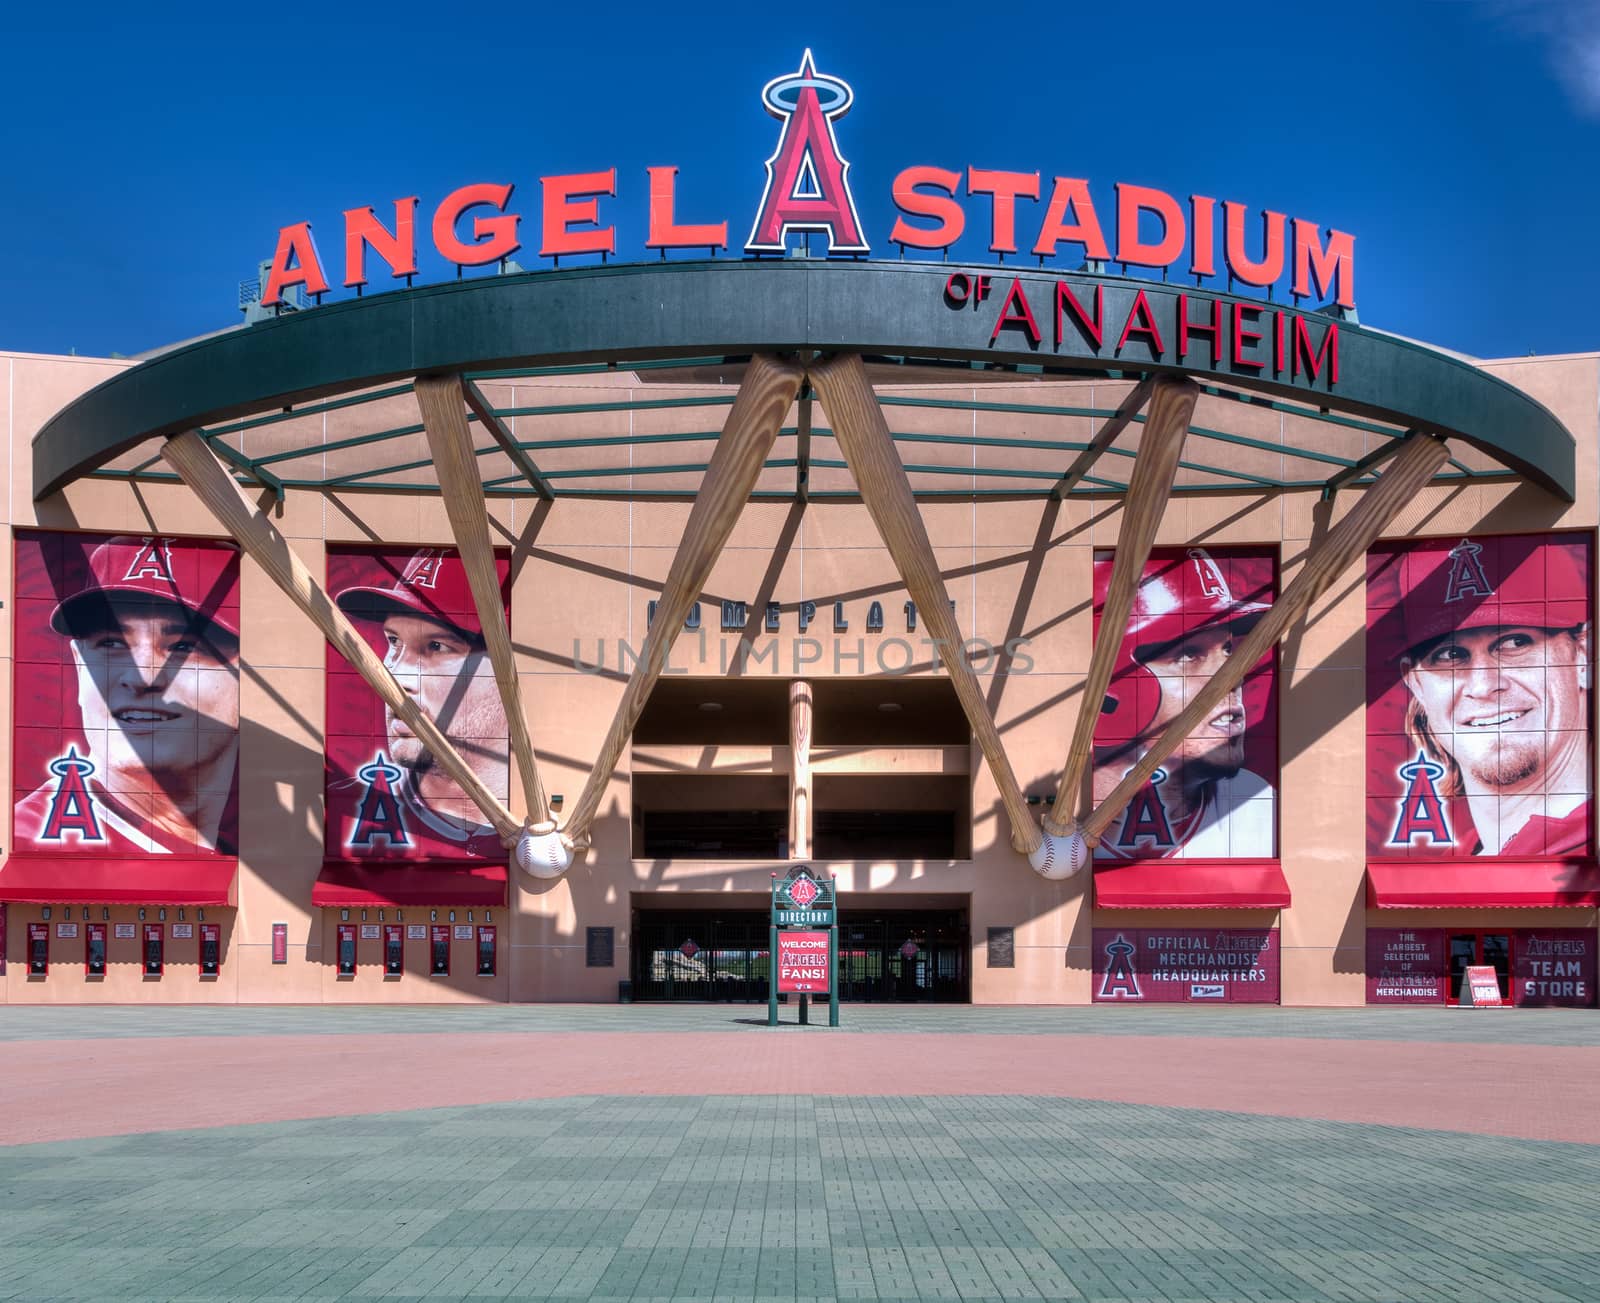 ANAHEIM, CA/USA - OCTOBER 10, 2015: Angel Stadium of Anaheim entrance. Angel Stadium is the home ballpark to Major League Baseball's Los Angeles Angels.